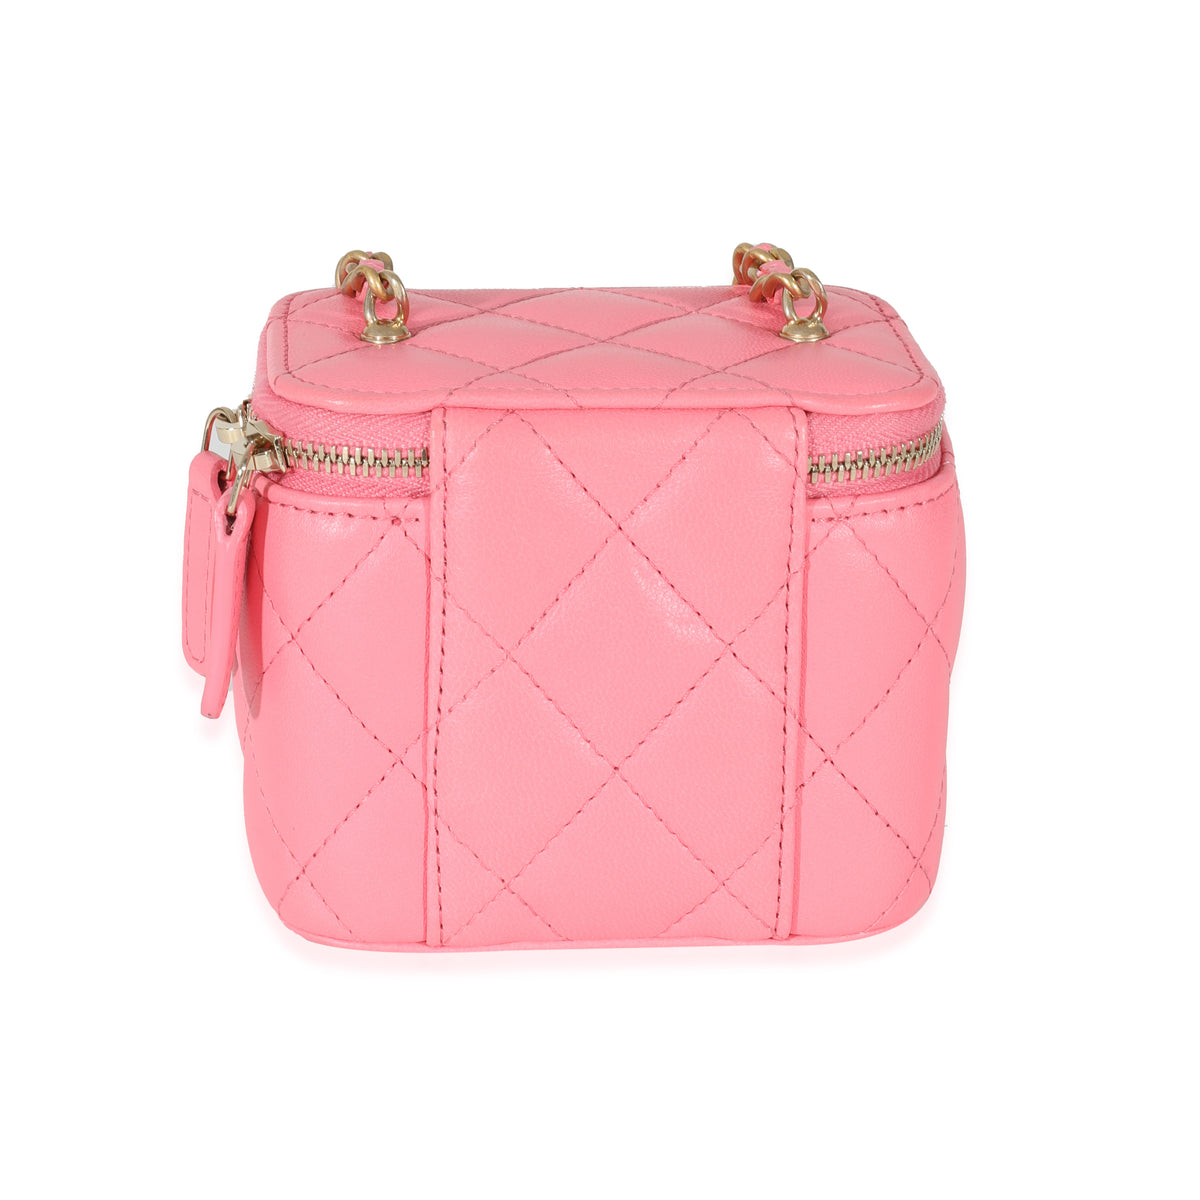 Chanel Vanity Case Medium Patent Pink